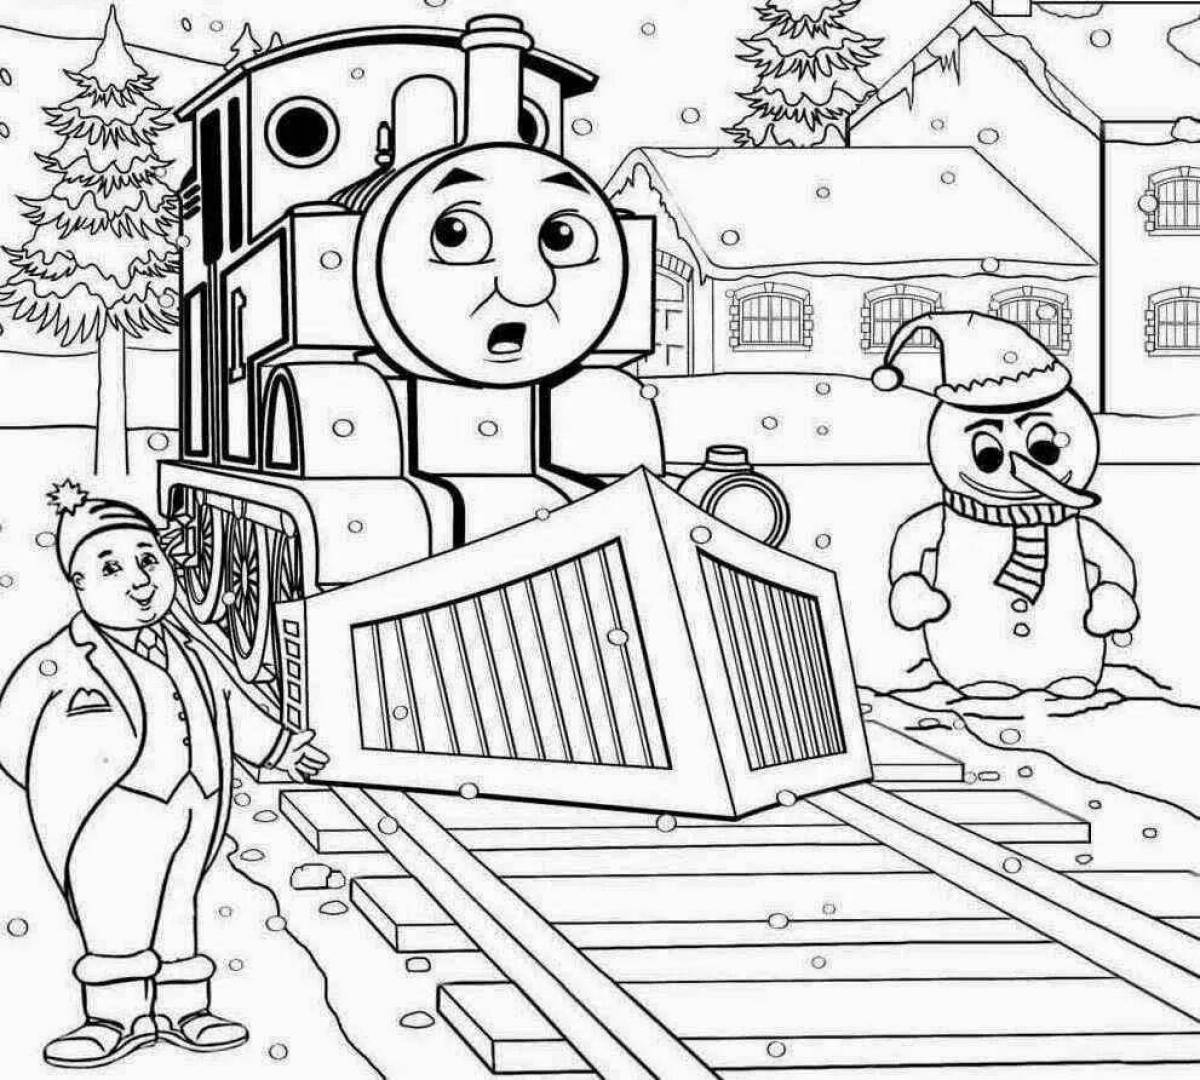 Sweet Thomas locomotive coloring page